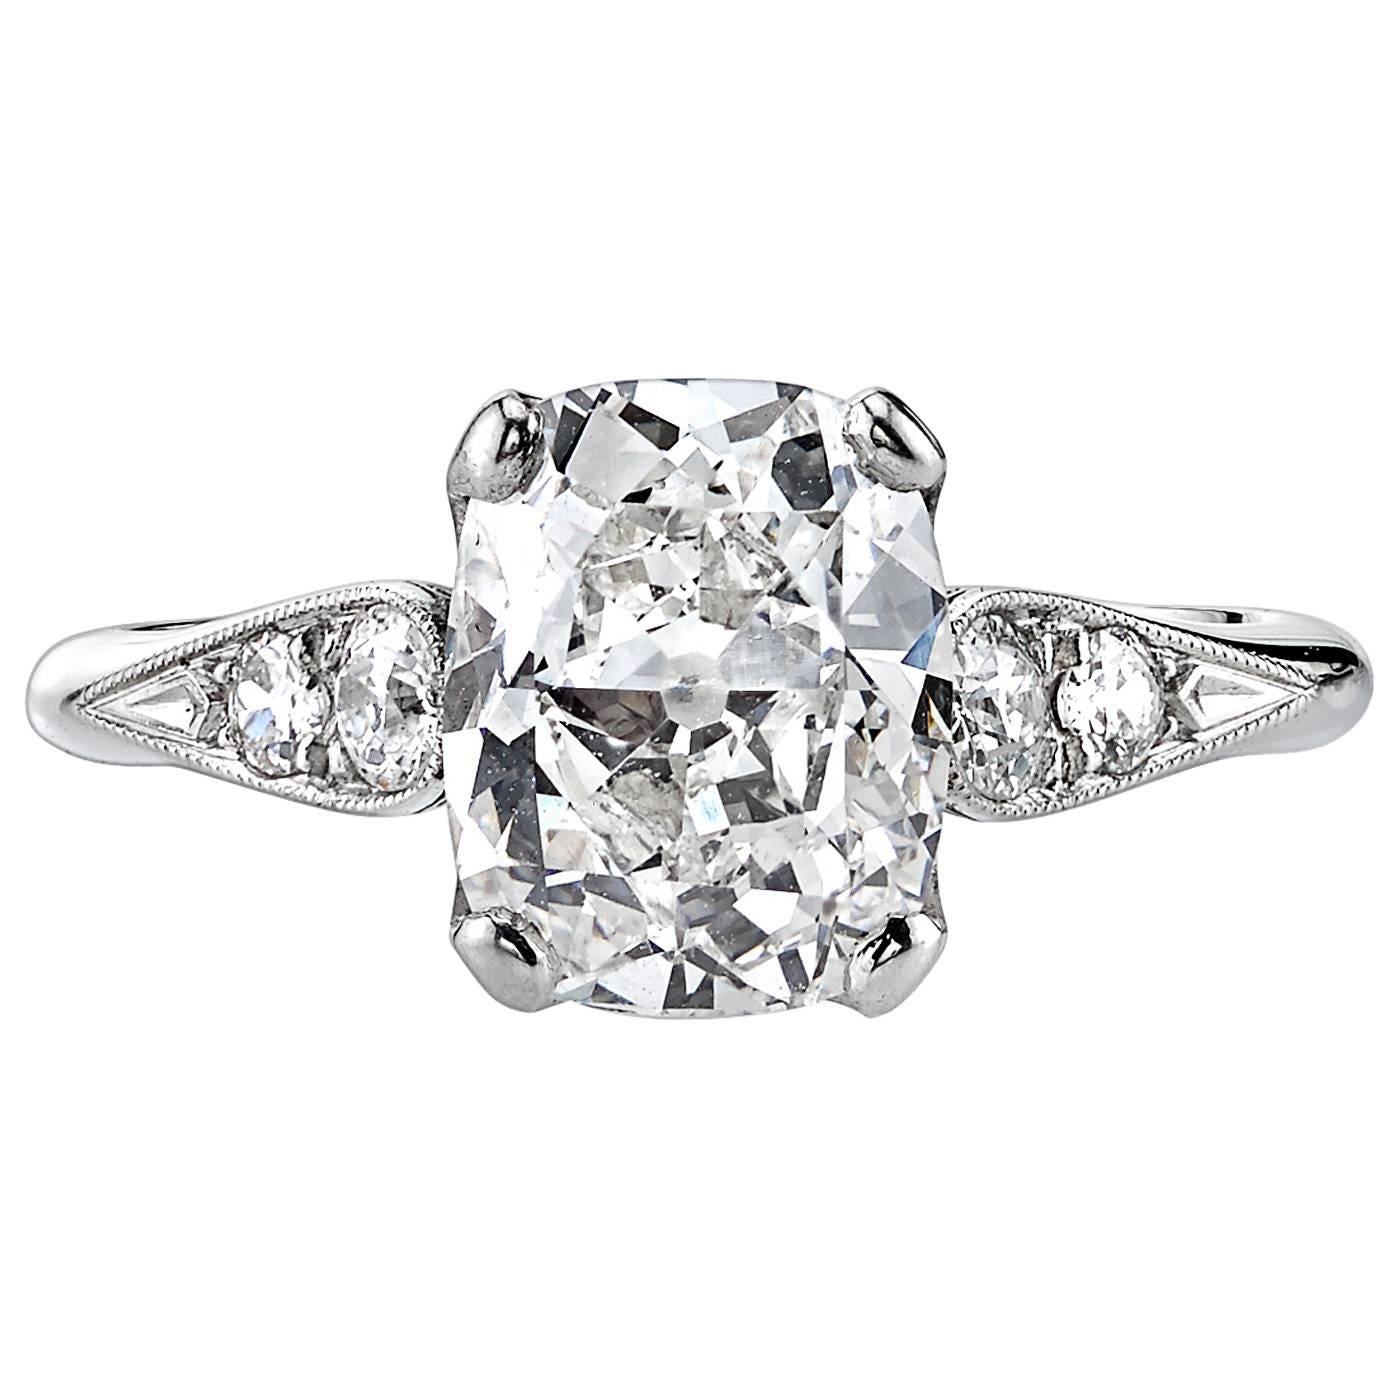 2.33 Carat Cushion Cut Diamond platinum Engagement Ring 